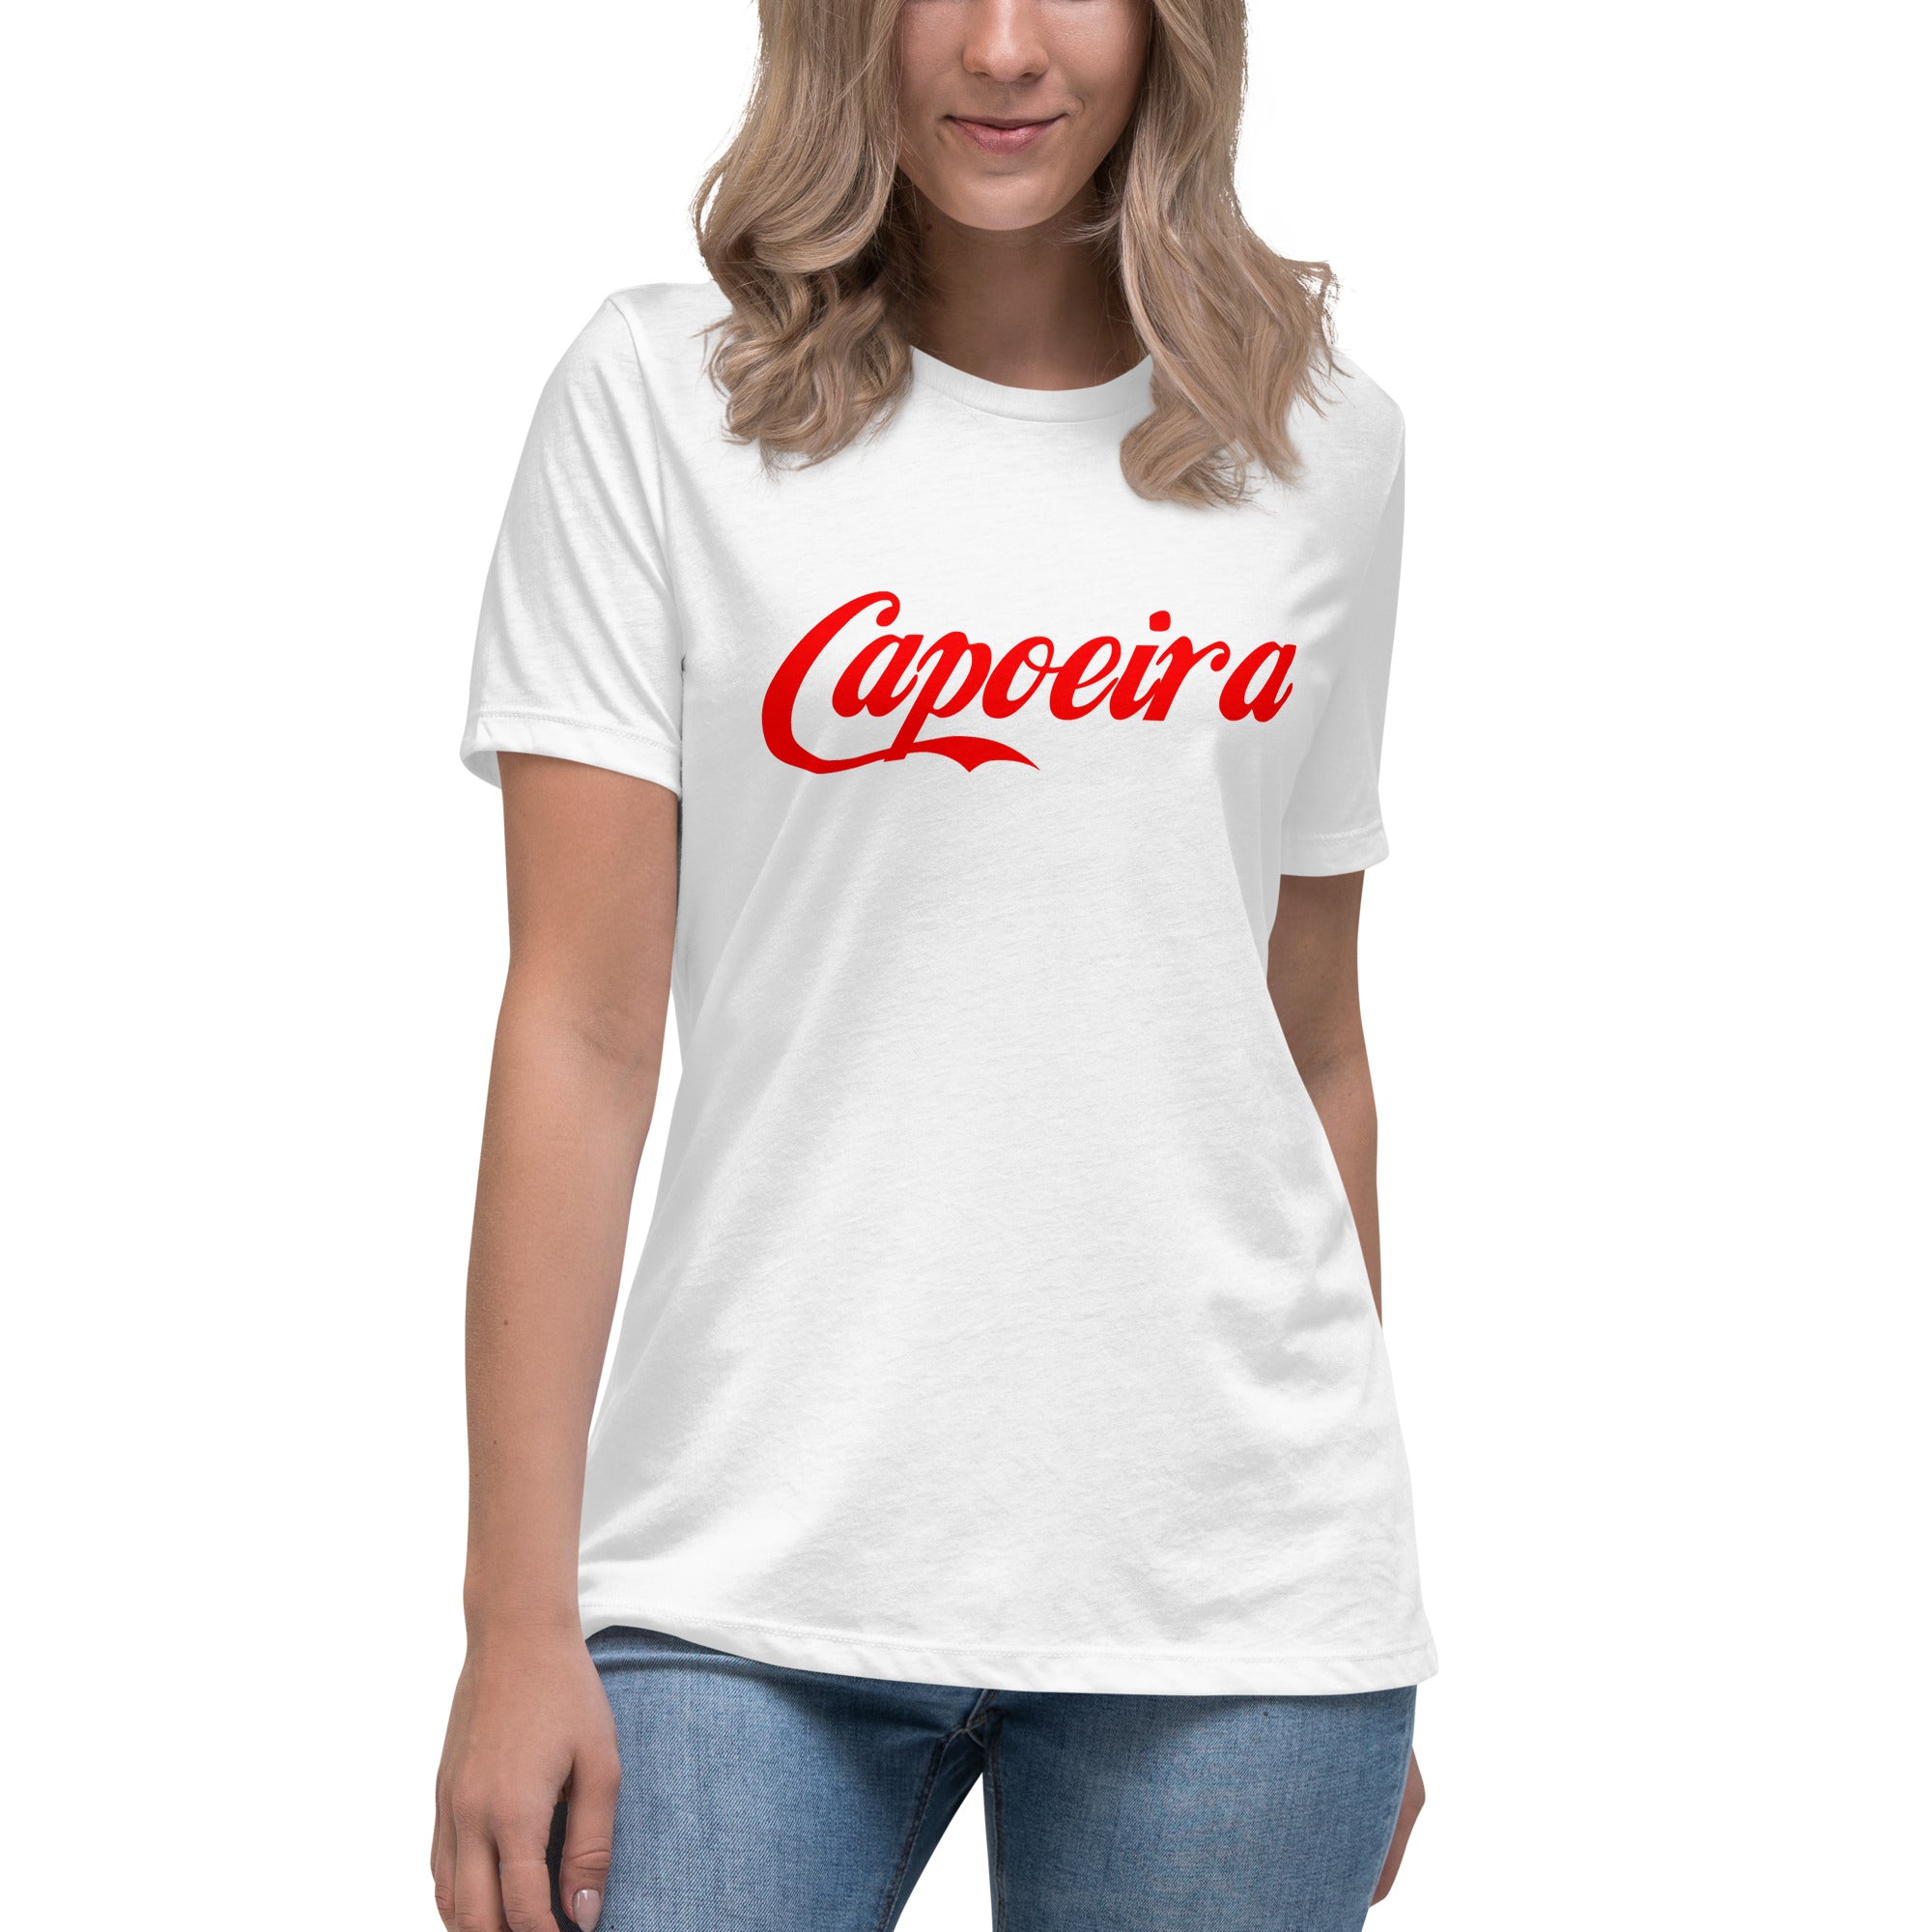 Capoeira Logo Women's Relaxed T-Shirt